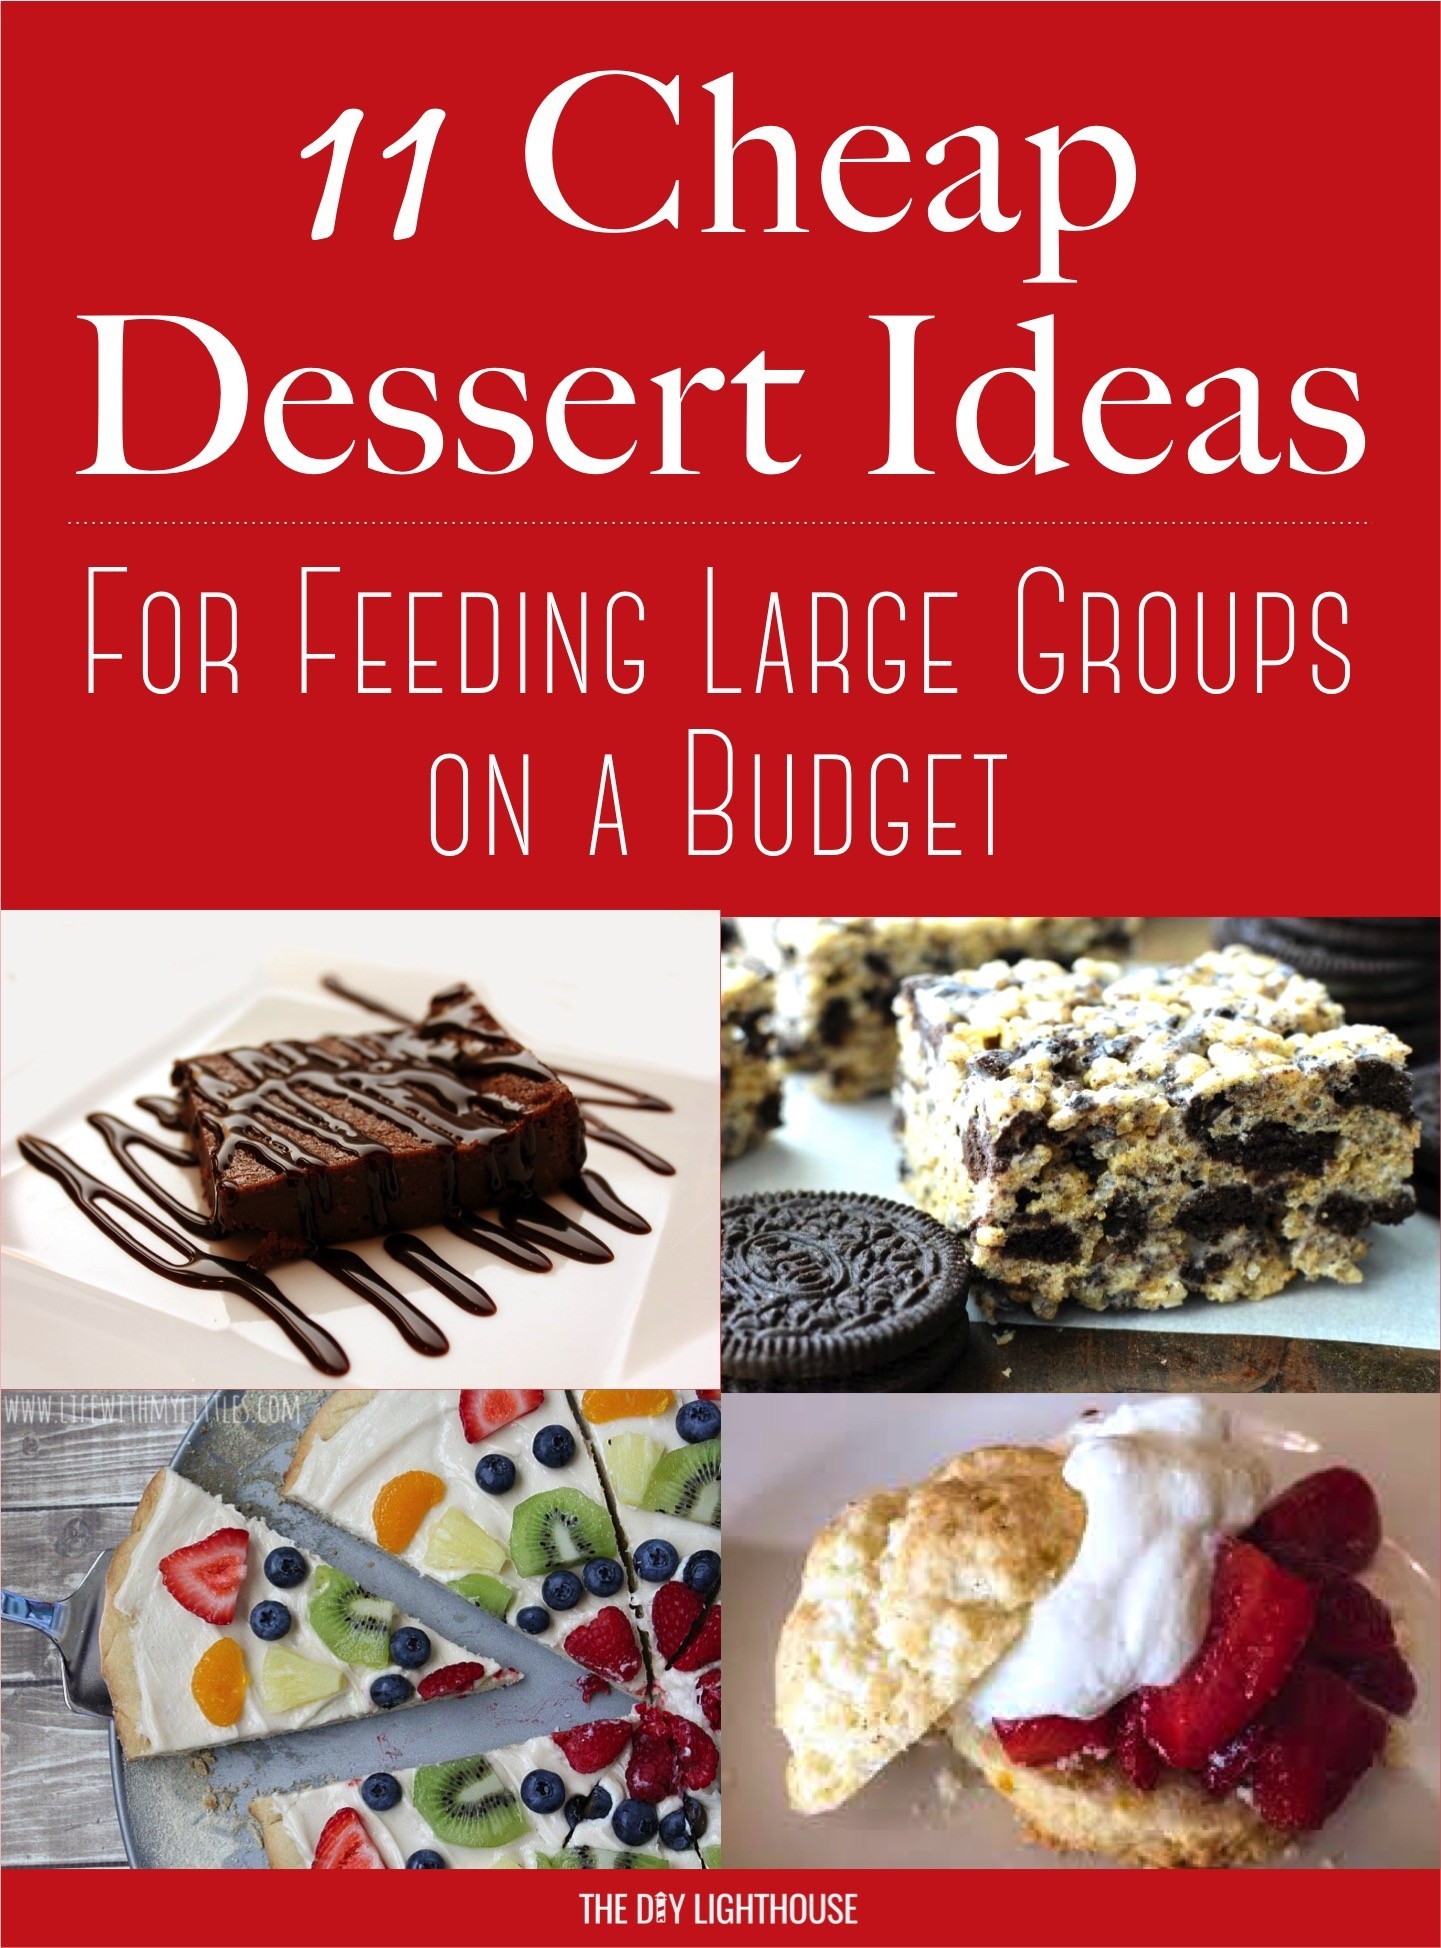 Budget-friendly dessert options